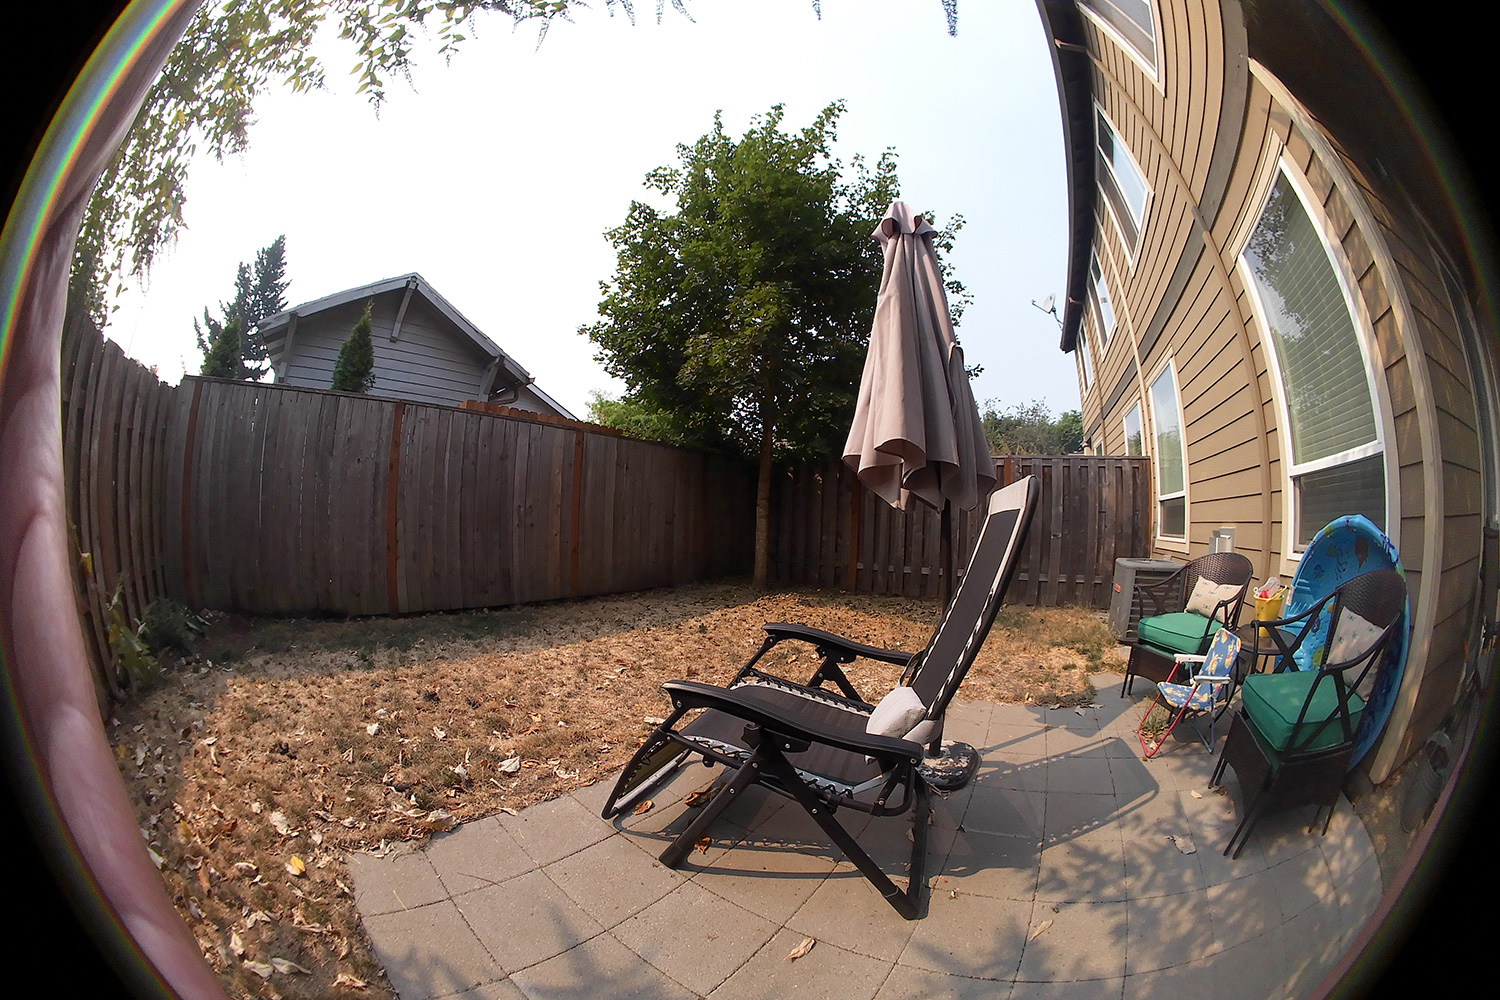 Kodak Pixpro Orbit360 4K camera sample patio dome